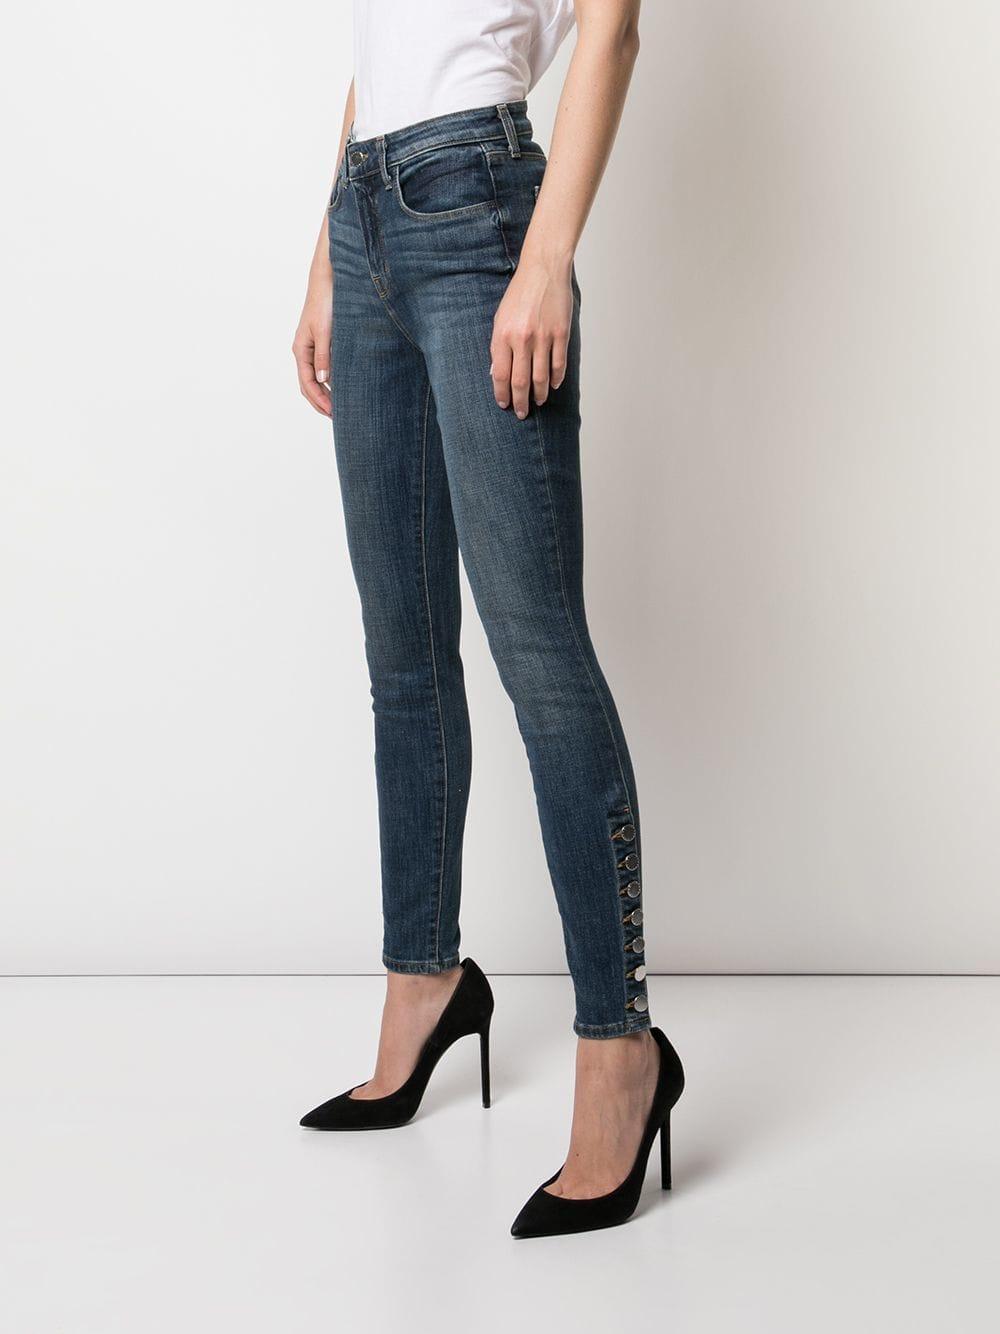 L'Agence Denim Piper Skinny Jeans in Blue - Lyst